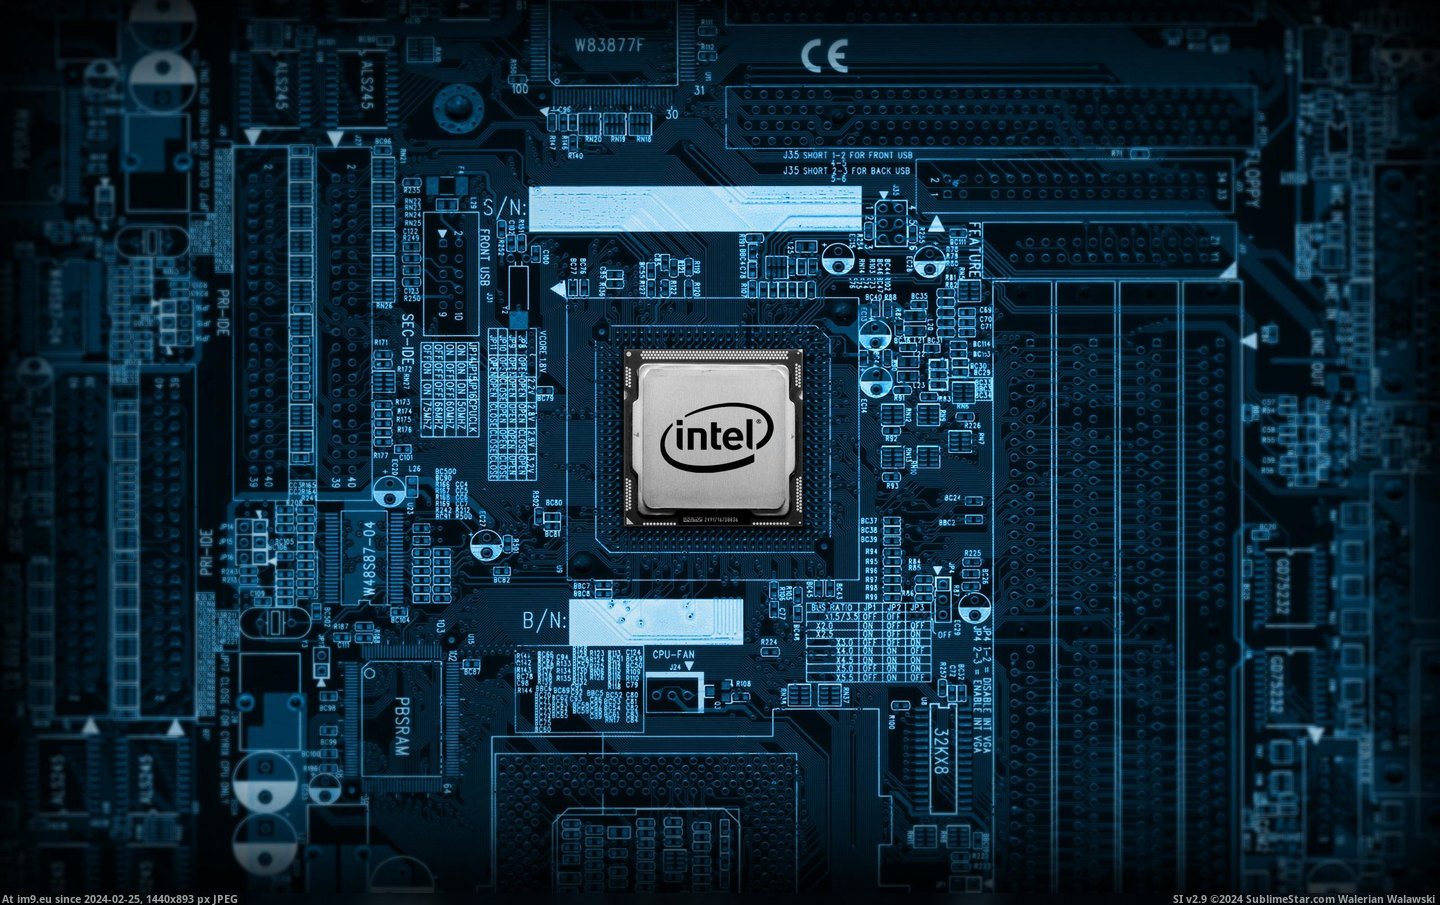 #Wallpaper #Chip #Intel #Wide Intel Chip Wide HD Wallpaper Pic. (Bild von album Unique HD Wallpapers))